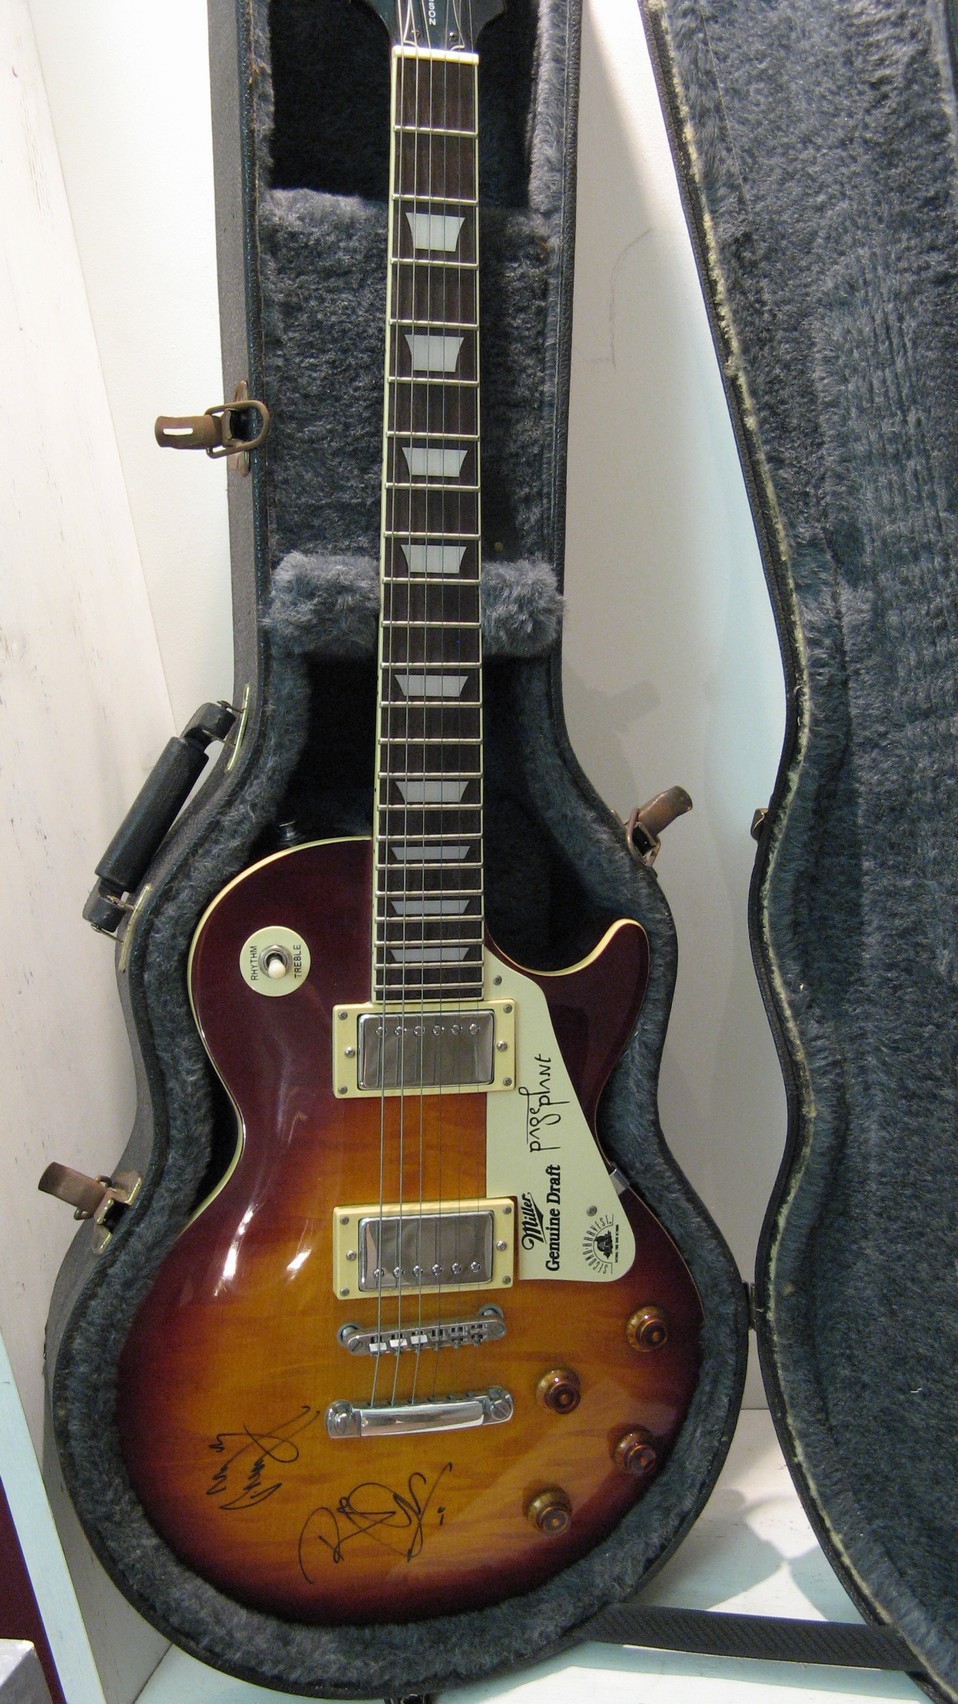 n_21- Chitarra Gibson 'Epiphone' di Jimmy Page & Robert Plant (Led Zeppelin).jpg